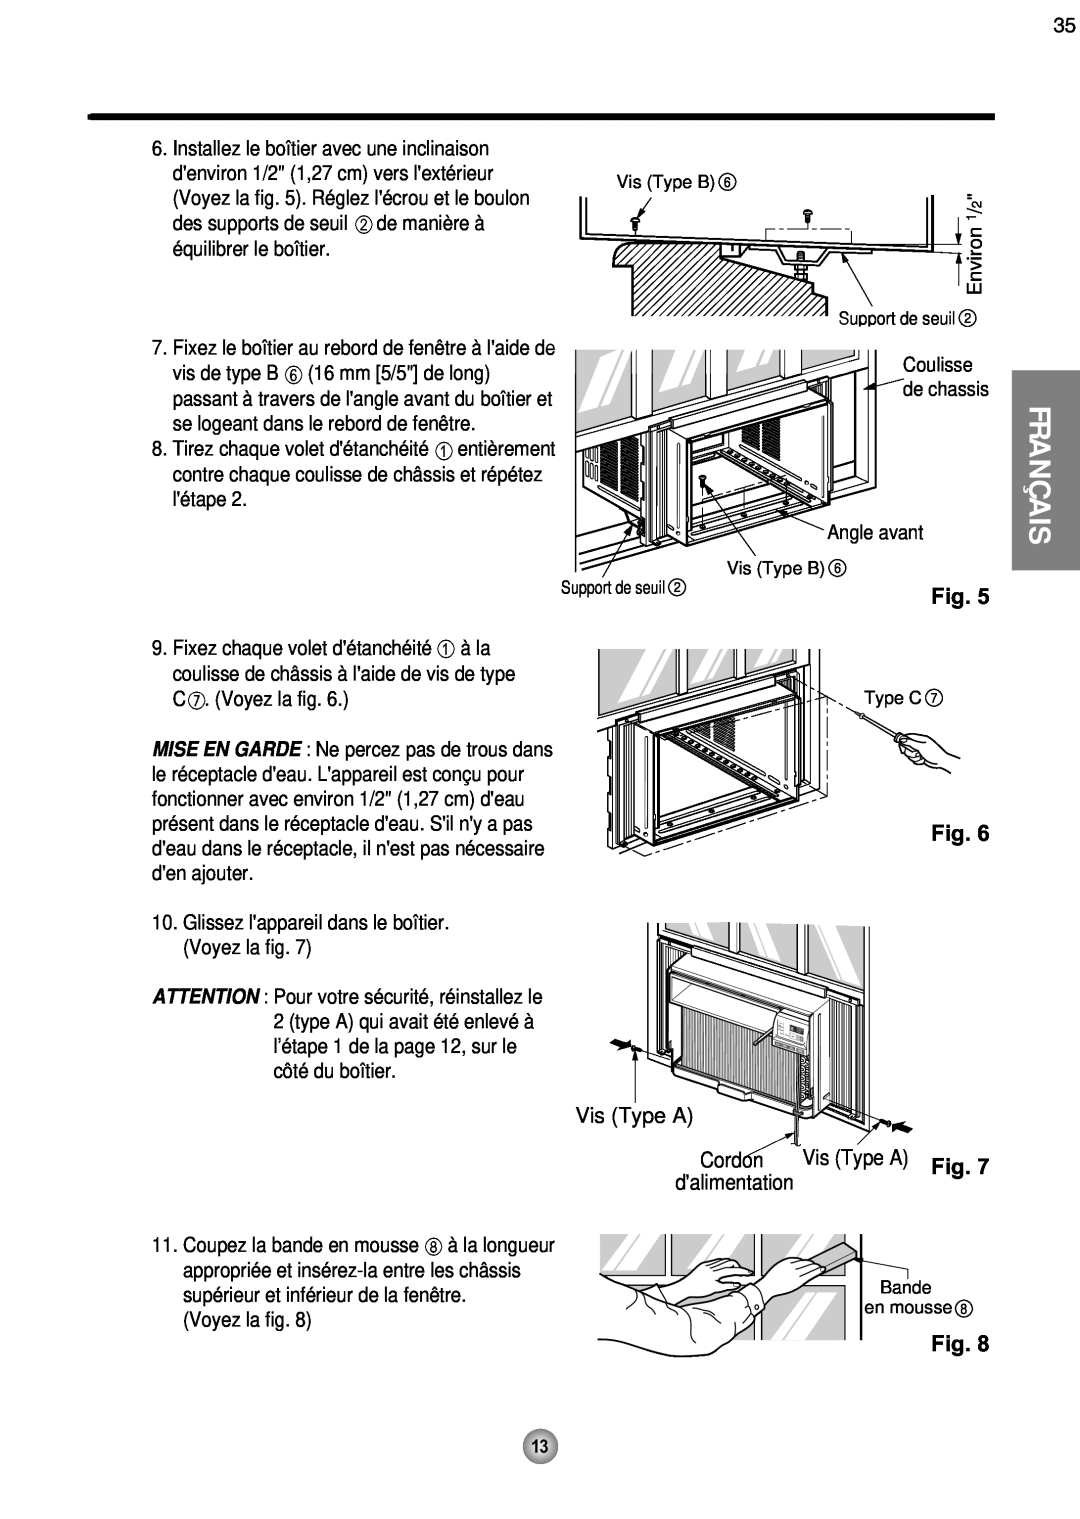 Friedrich CP08 operation manual Français, Vis Type A, Cordon, dalimentation 